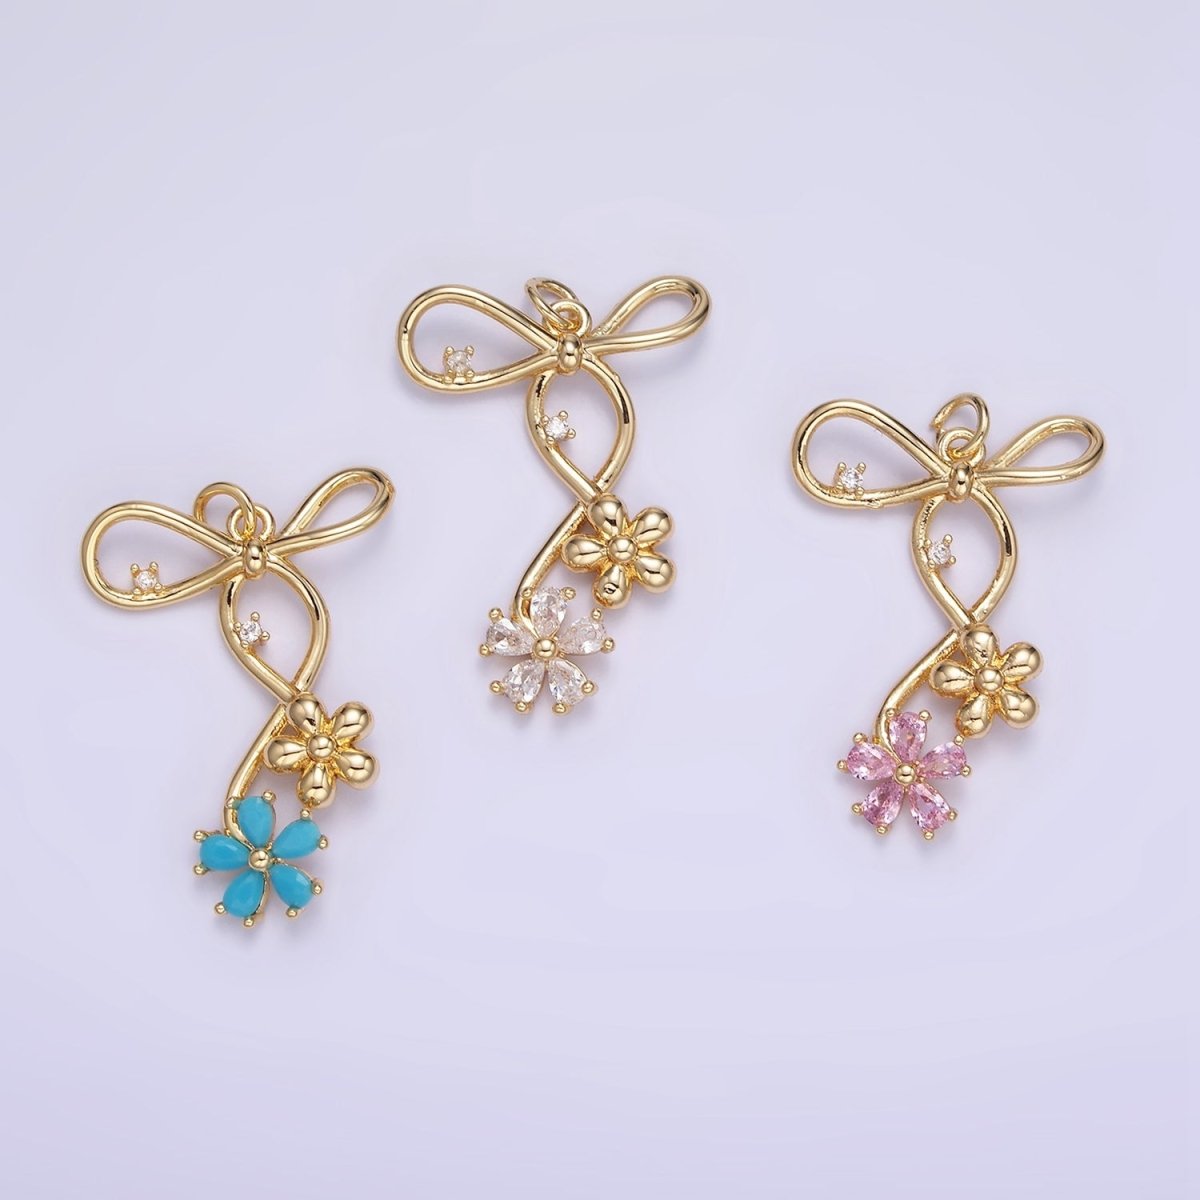 14K Gold Filled Pink, Blue, Clear CZ Flower Ribbon Bow Charm | W770 - W772 - DLUXCA